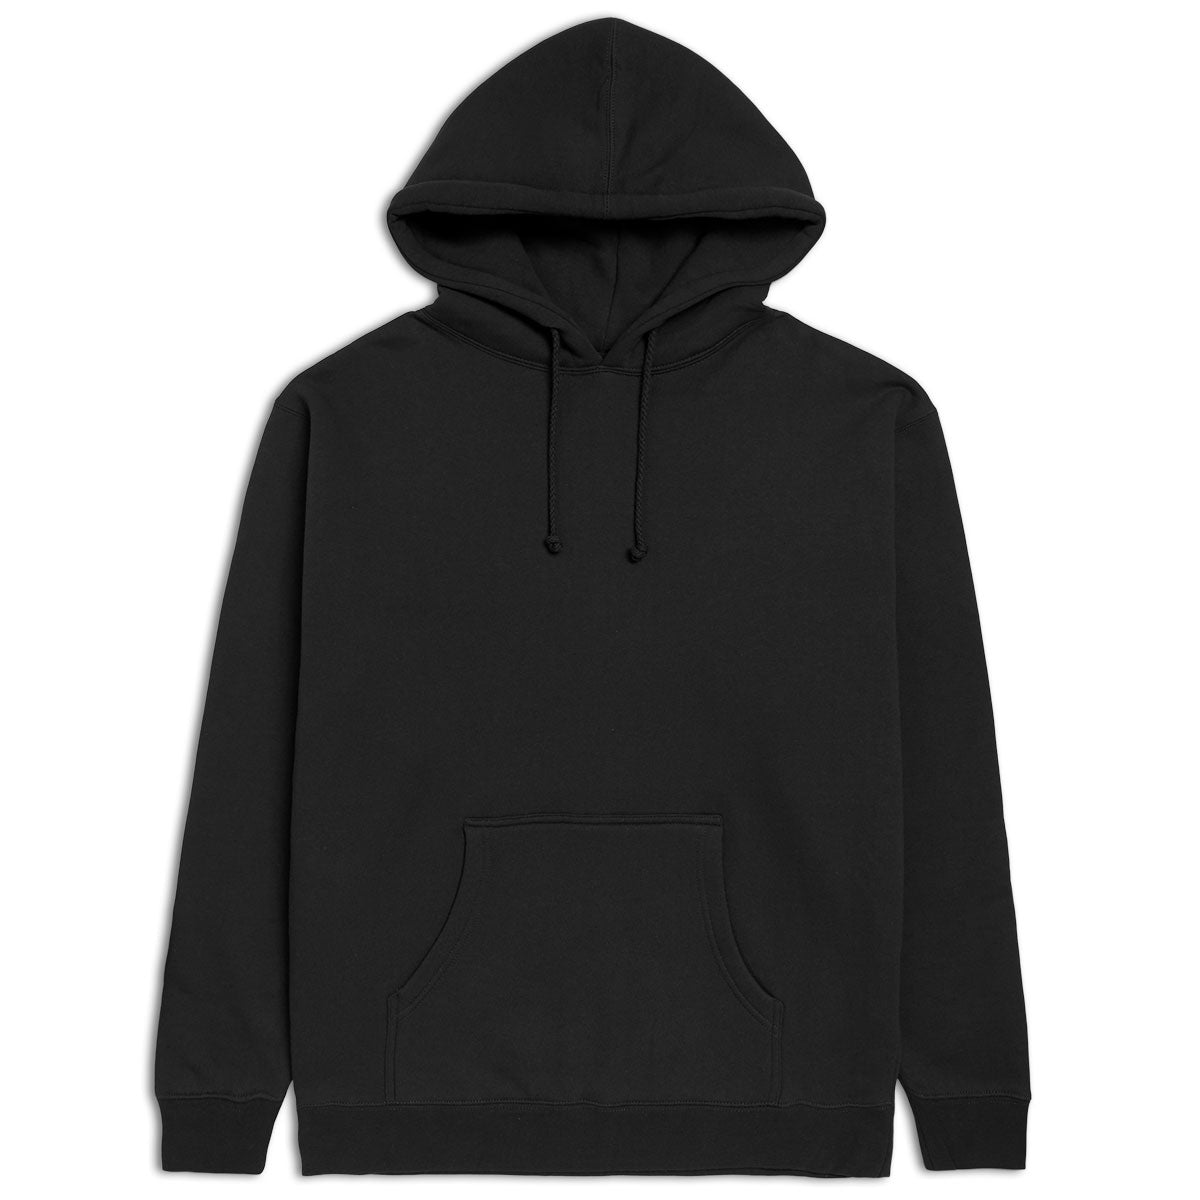 CCS Staple Pullover Hoodie - Black image 1